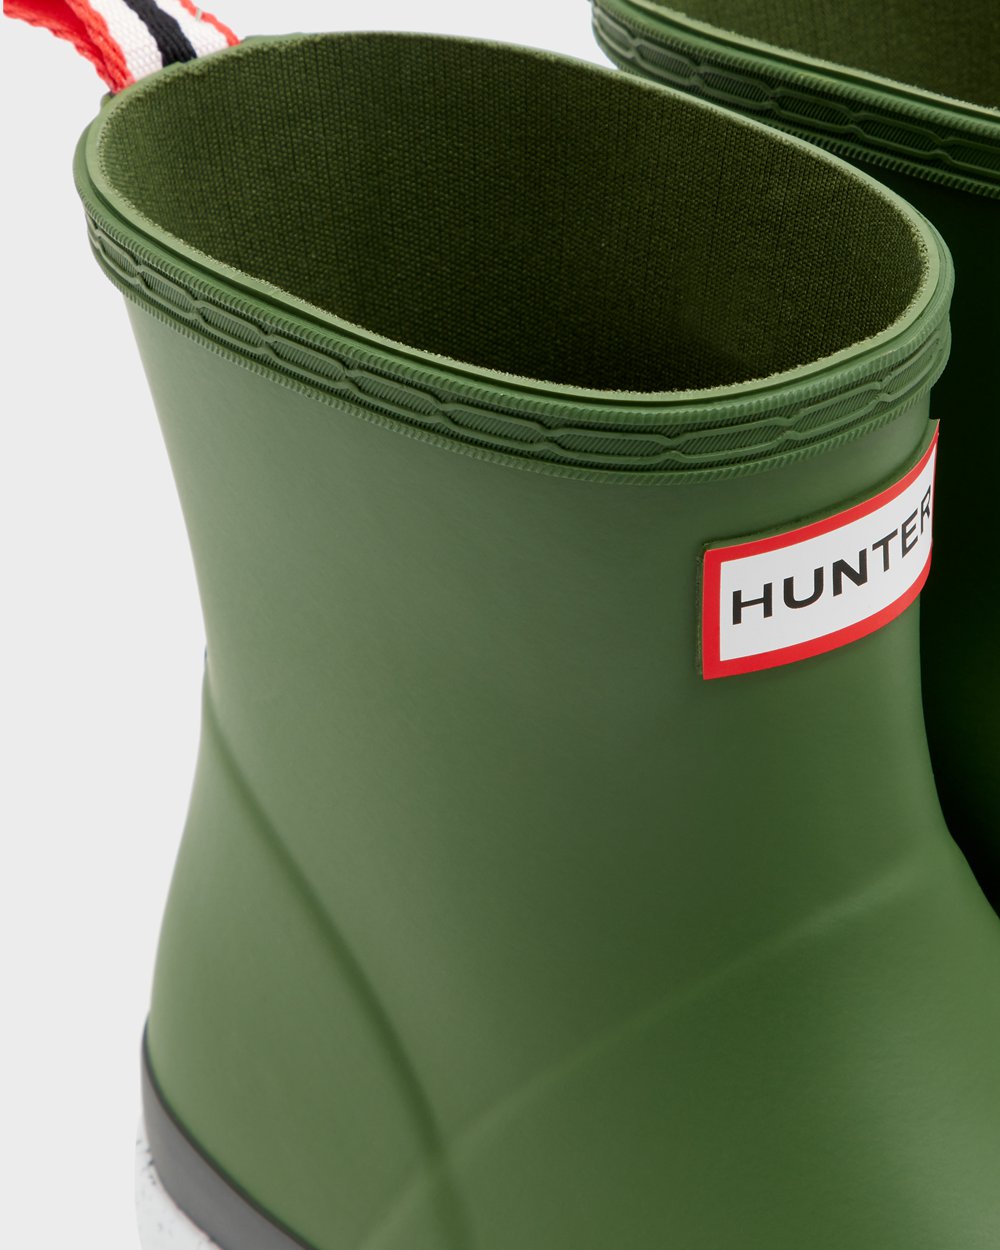 Womens Play Boots - Hunter Original Short Speckle Rain (30MPLJDBX) - Green/White